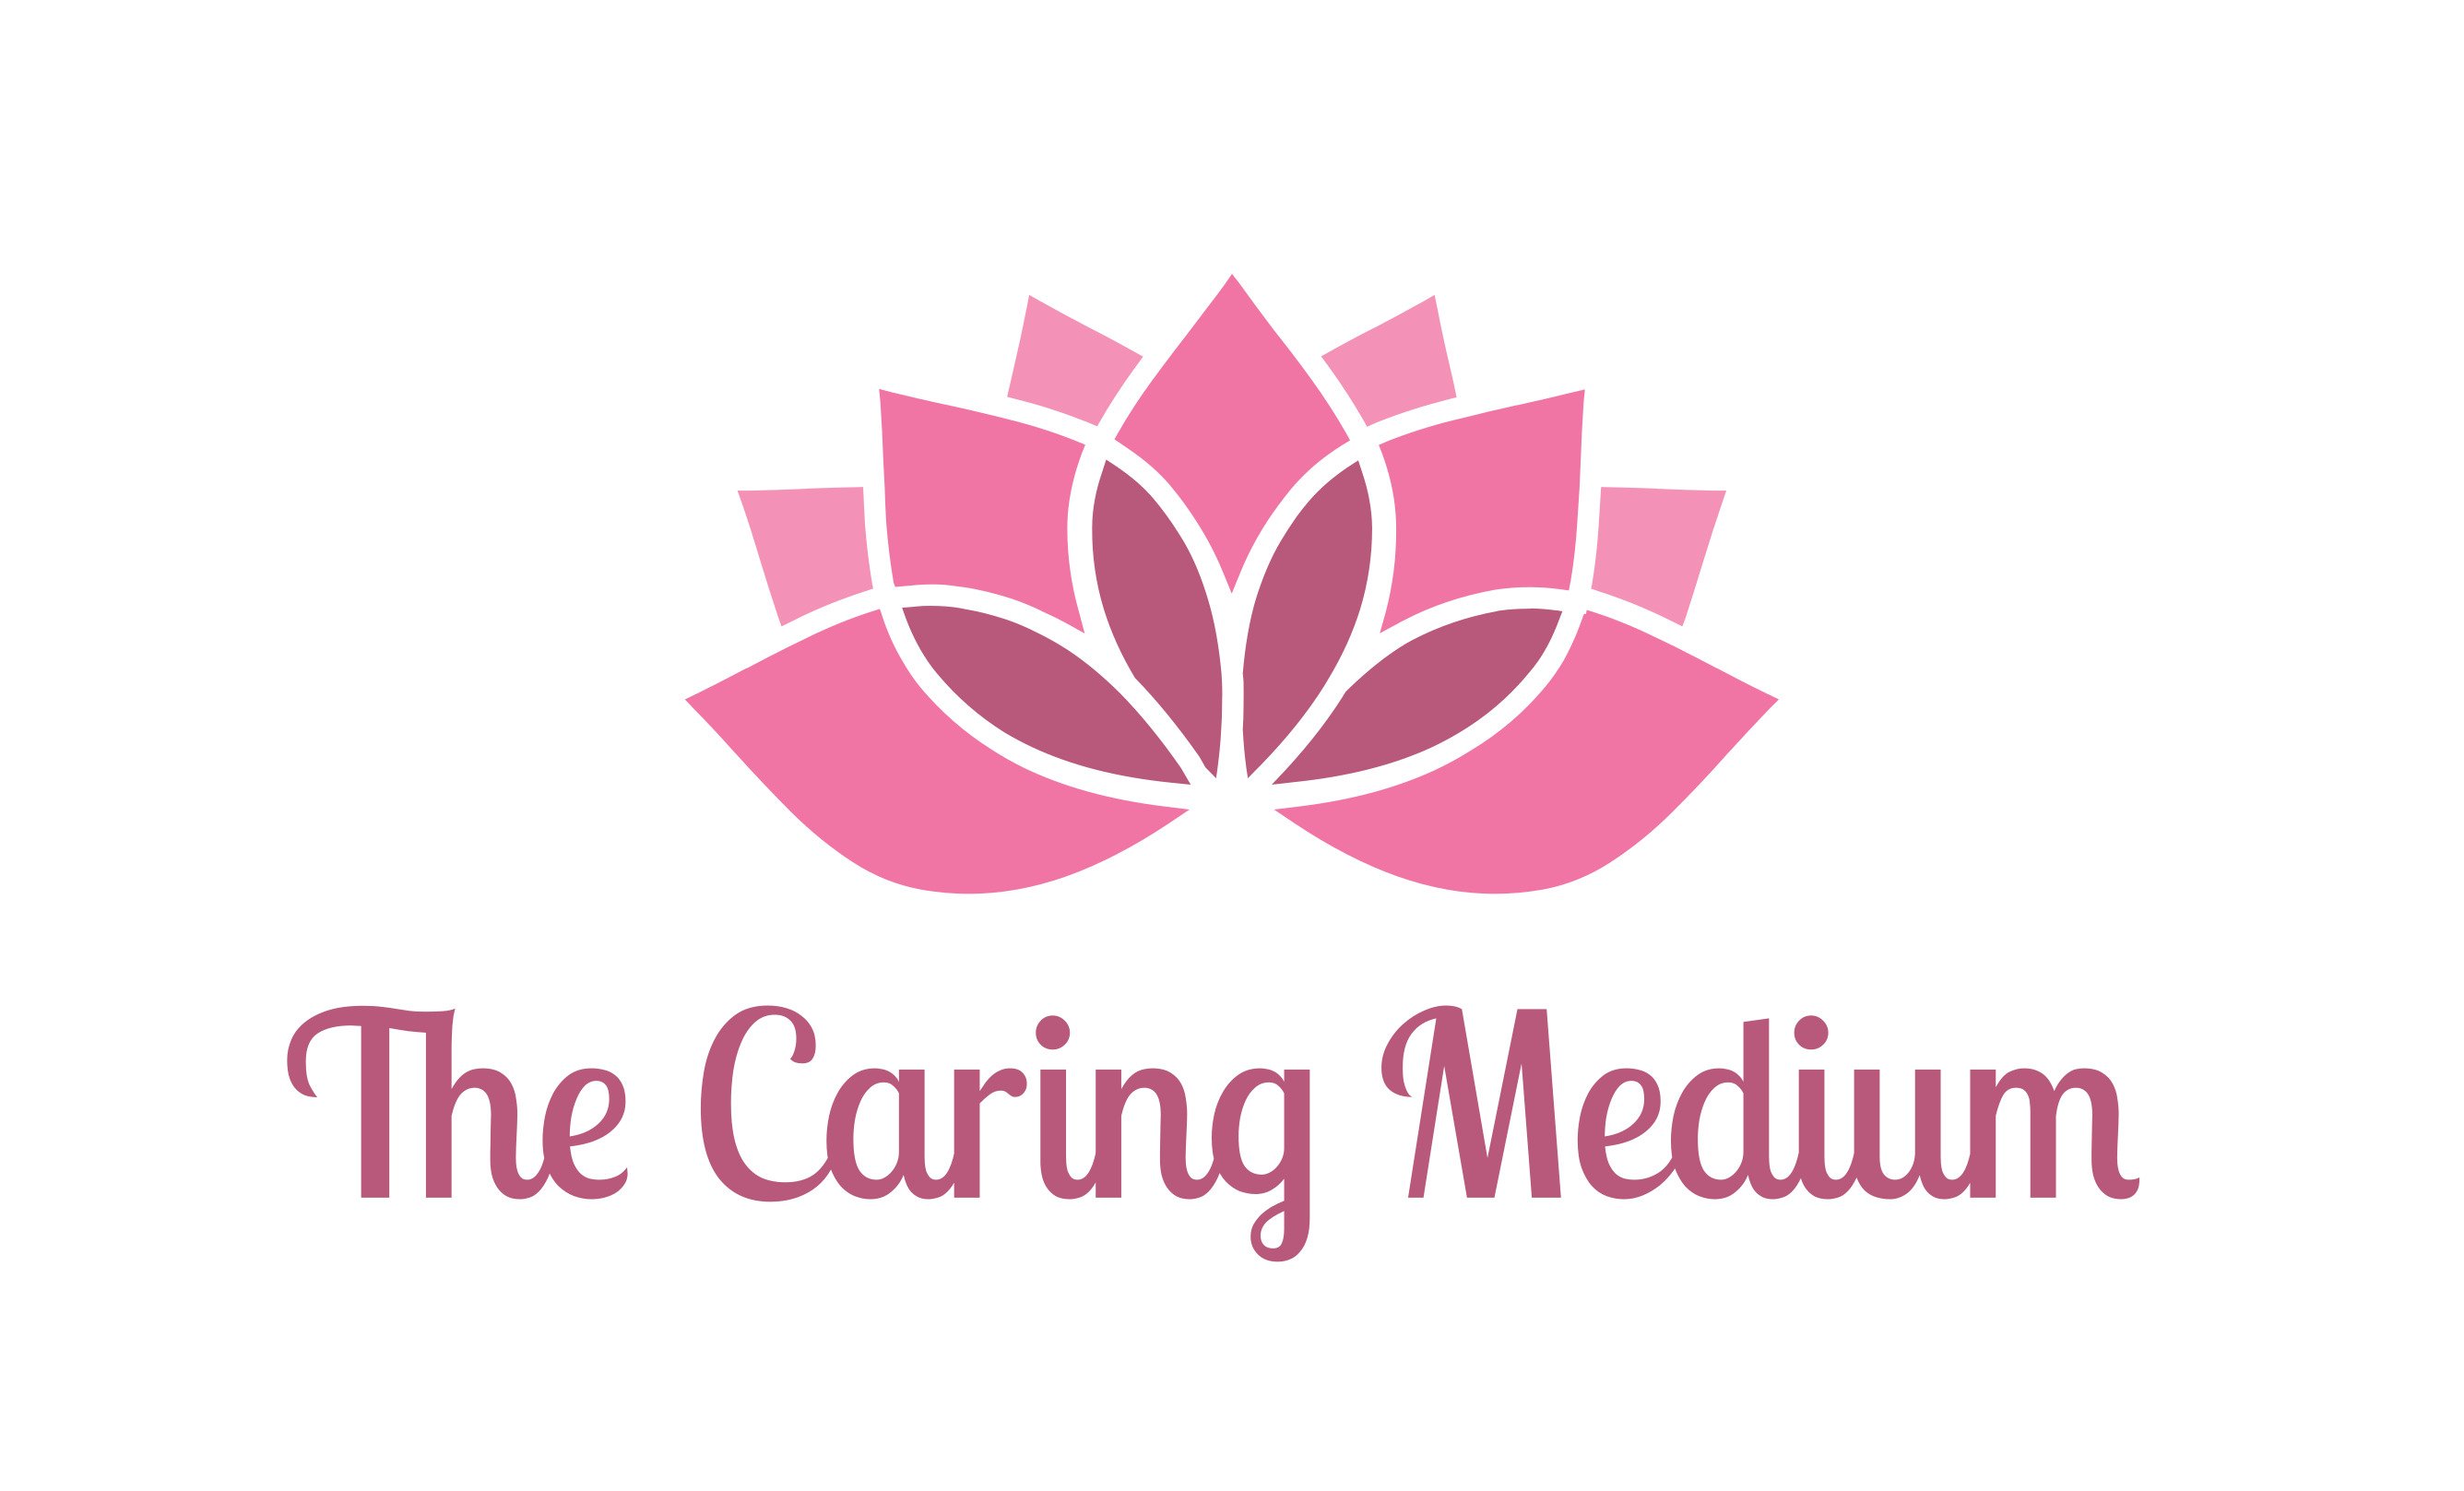 The Caring Medium